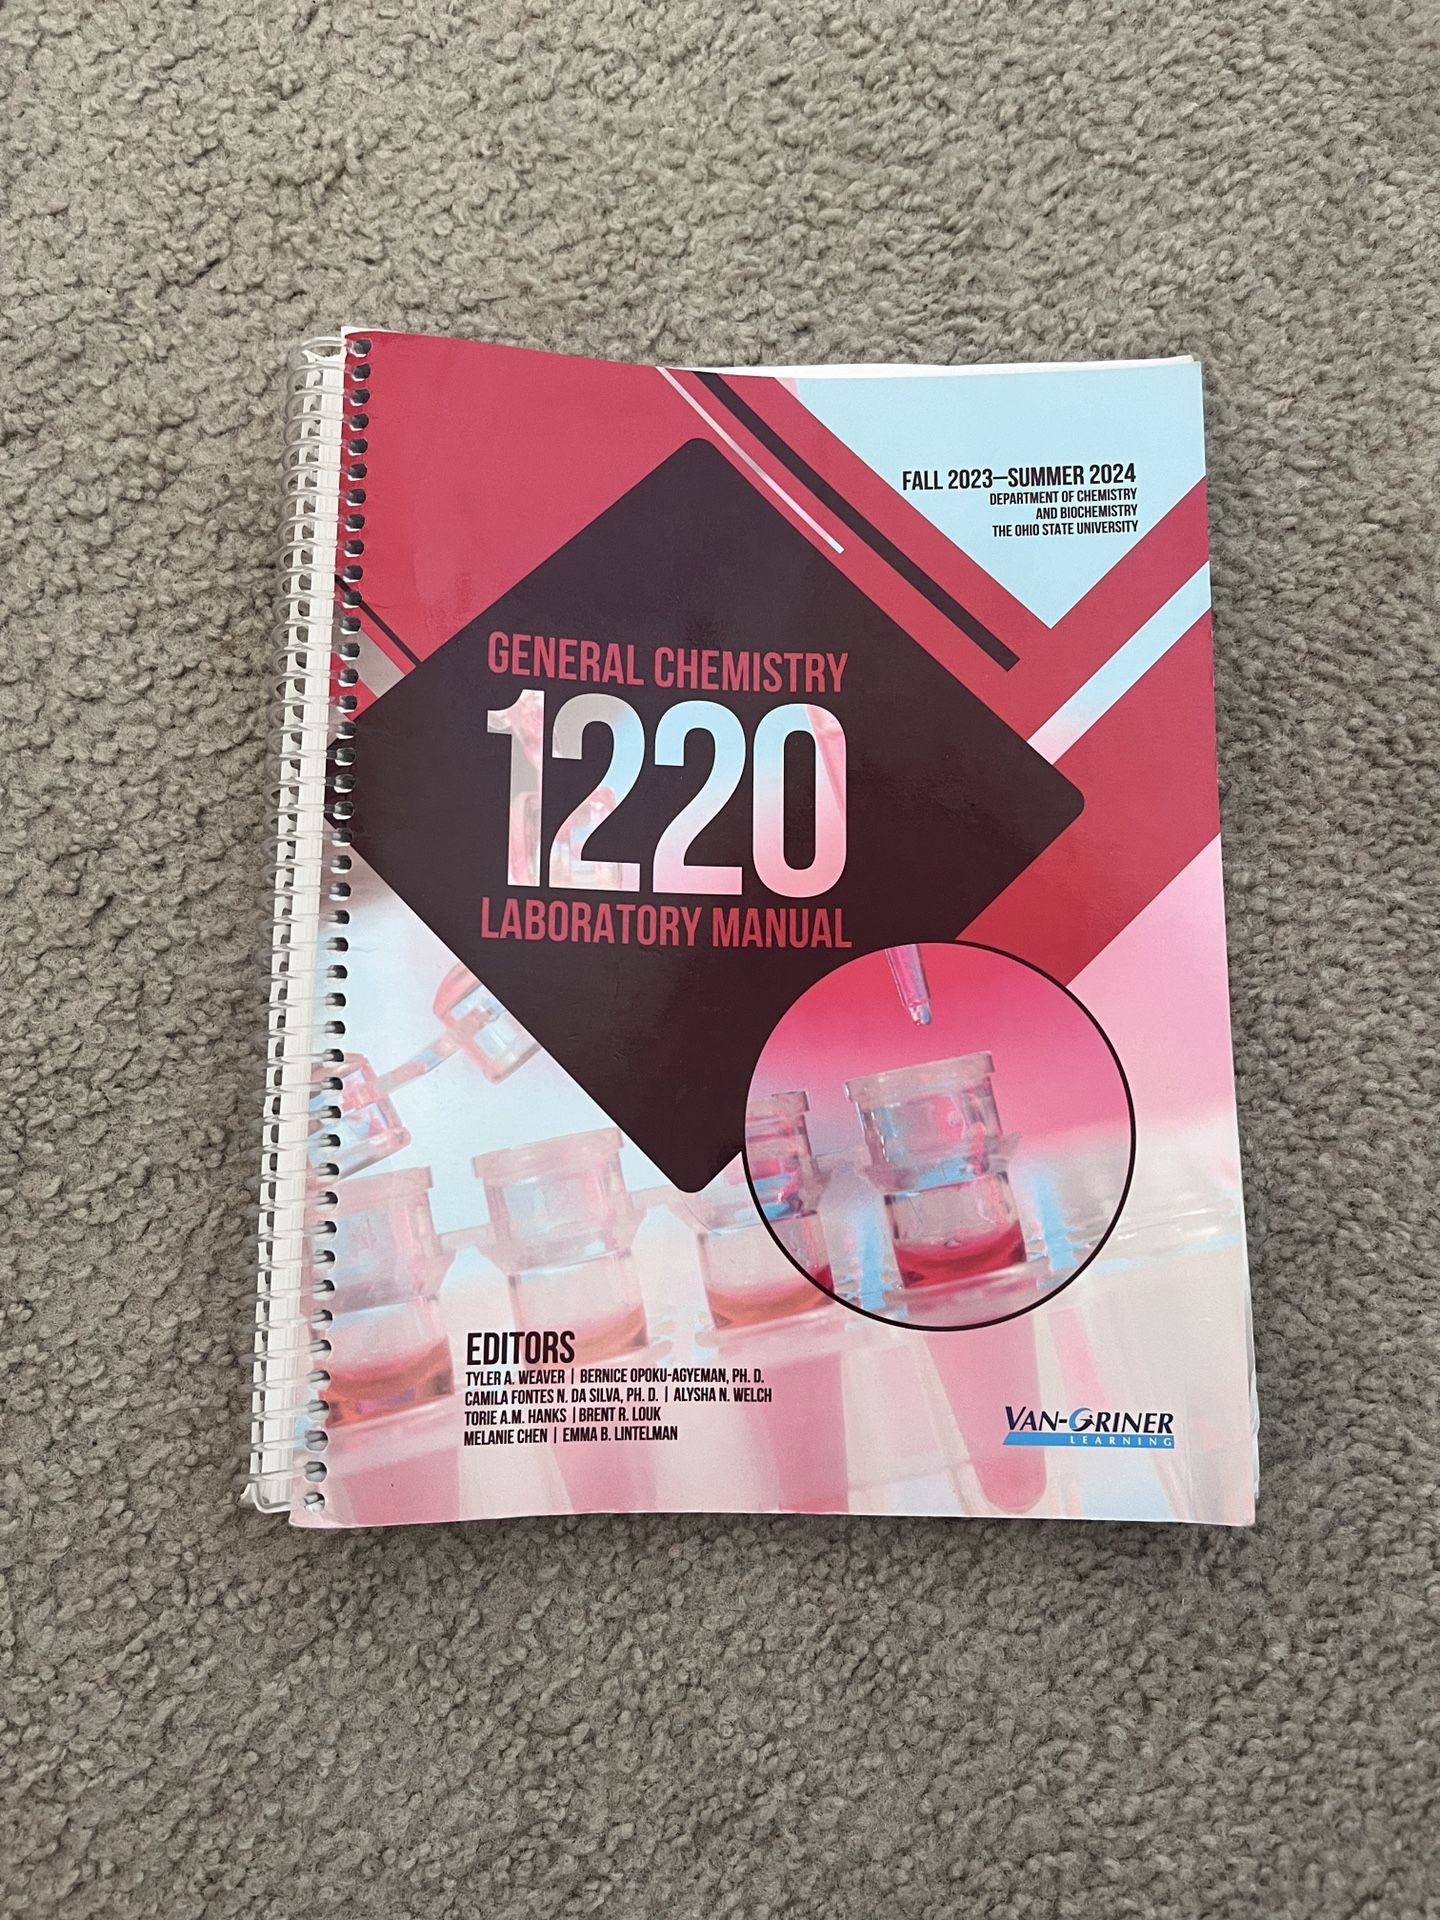 General Chemistry 1220 Laboratory Manual 